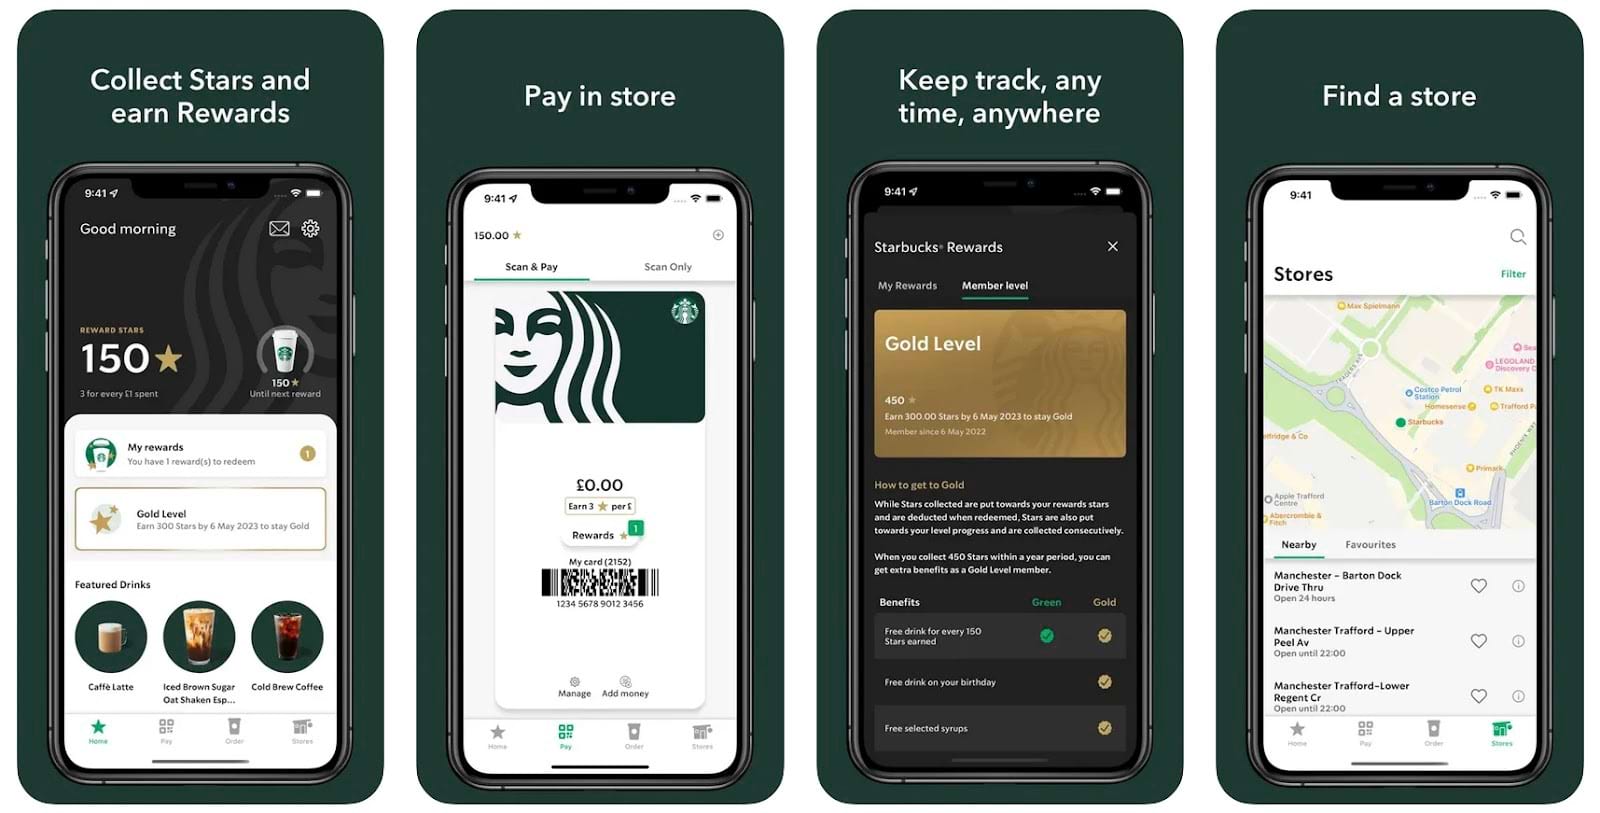 Starbucks' rewards program